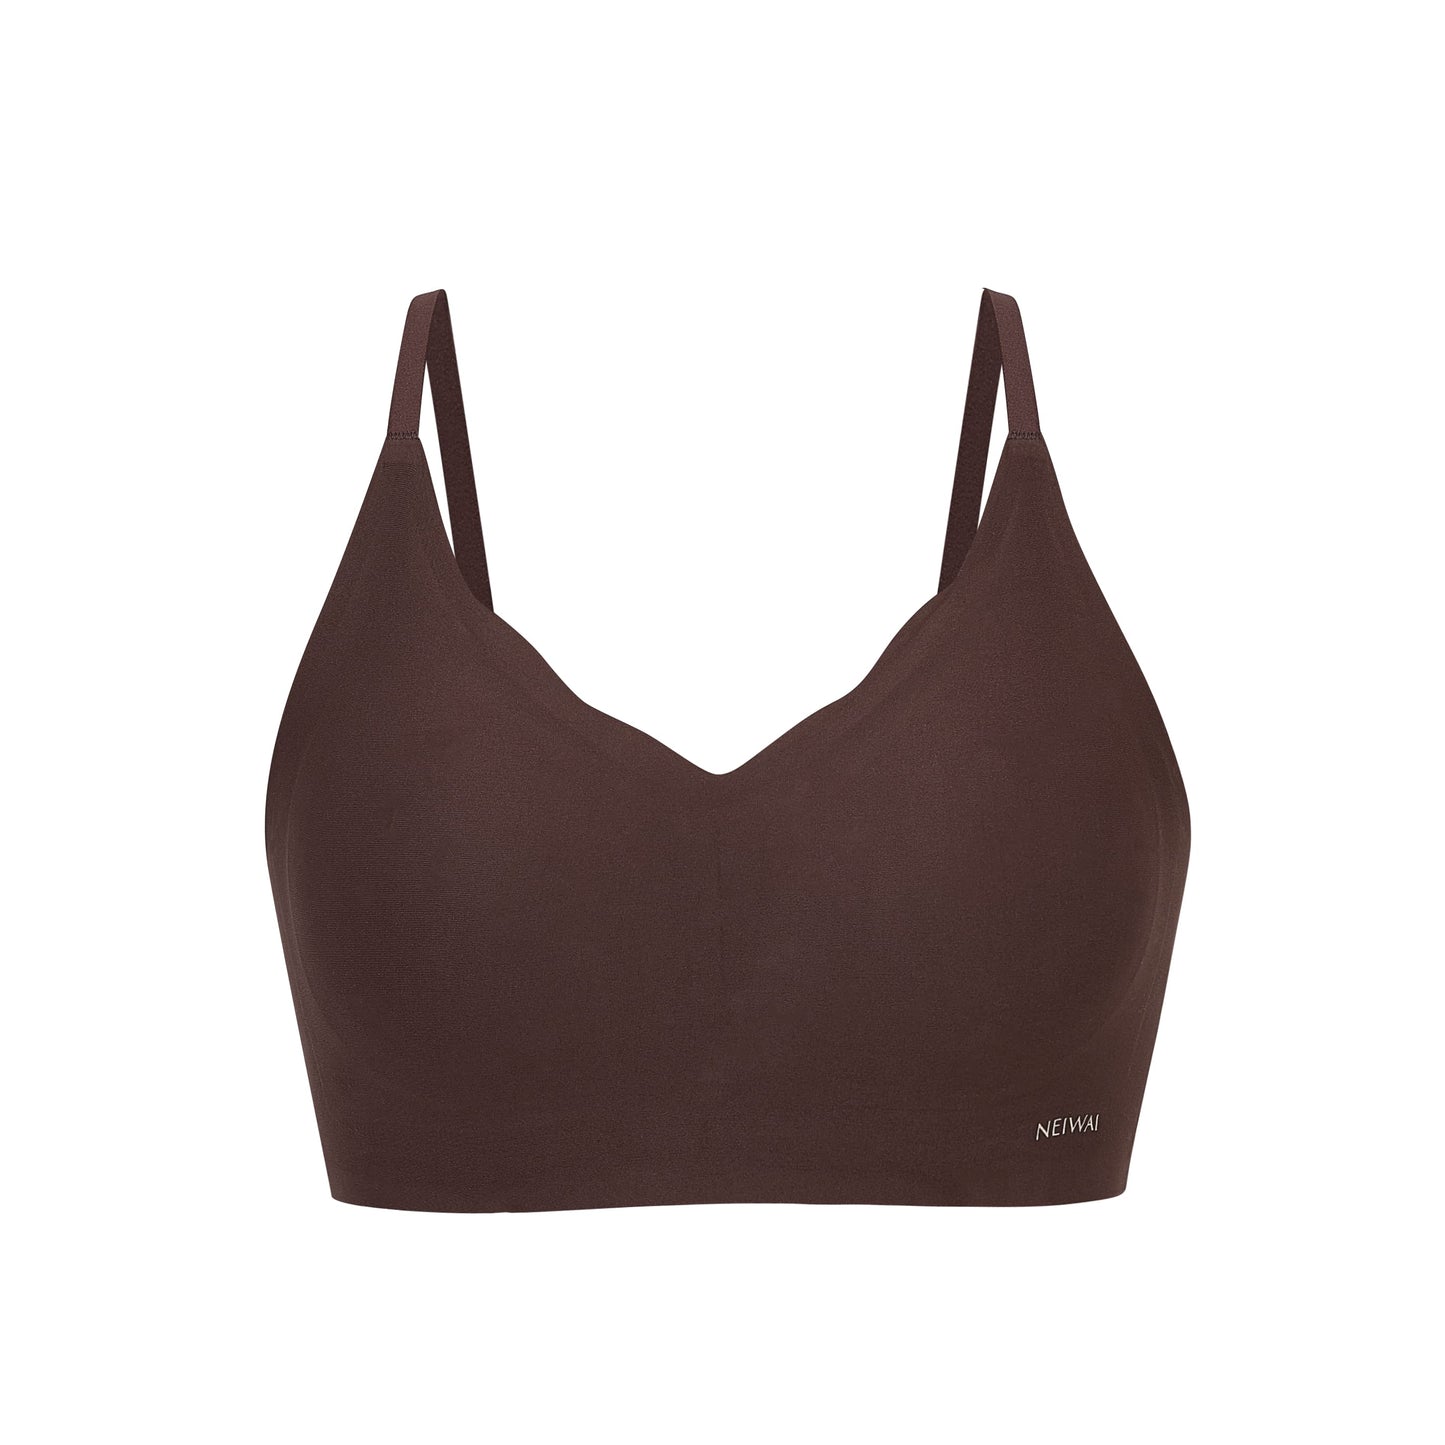 Flat lay image of dark brown bra